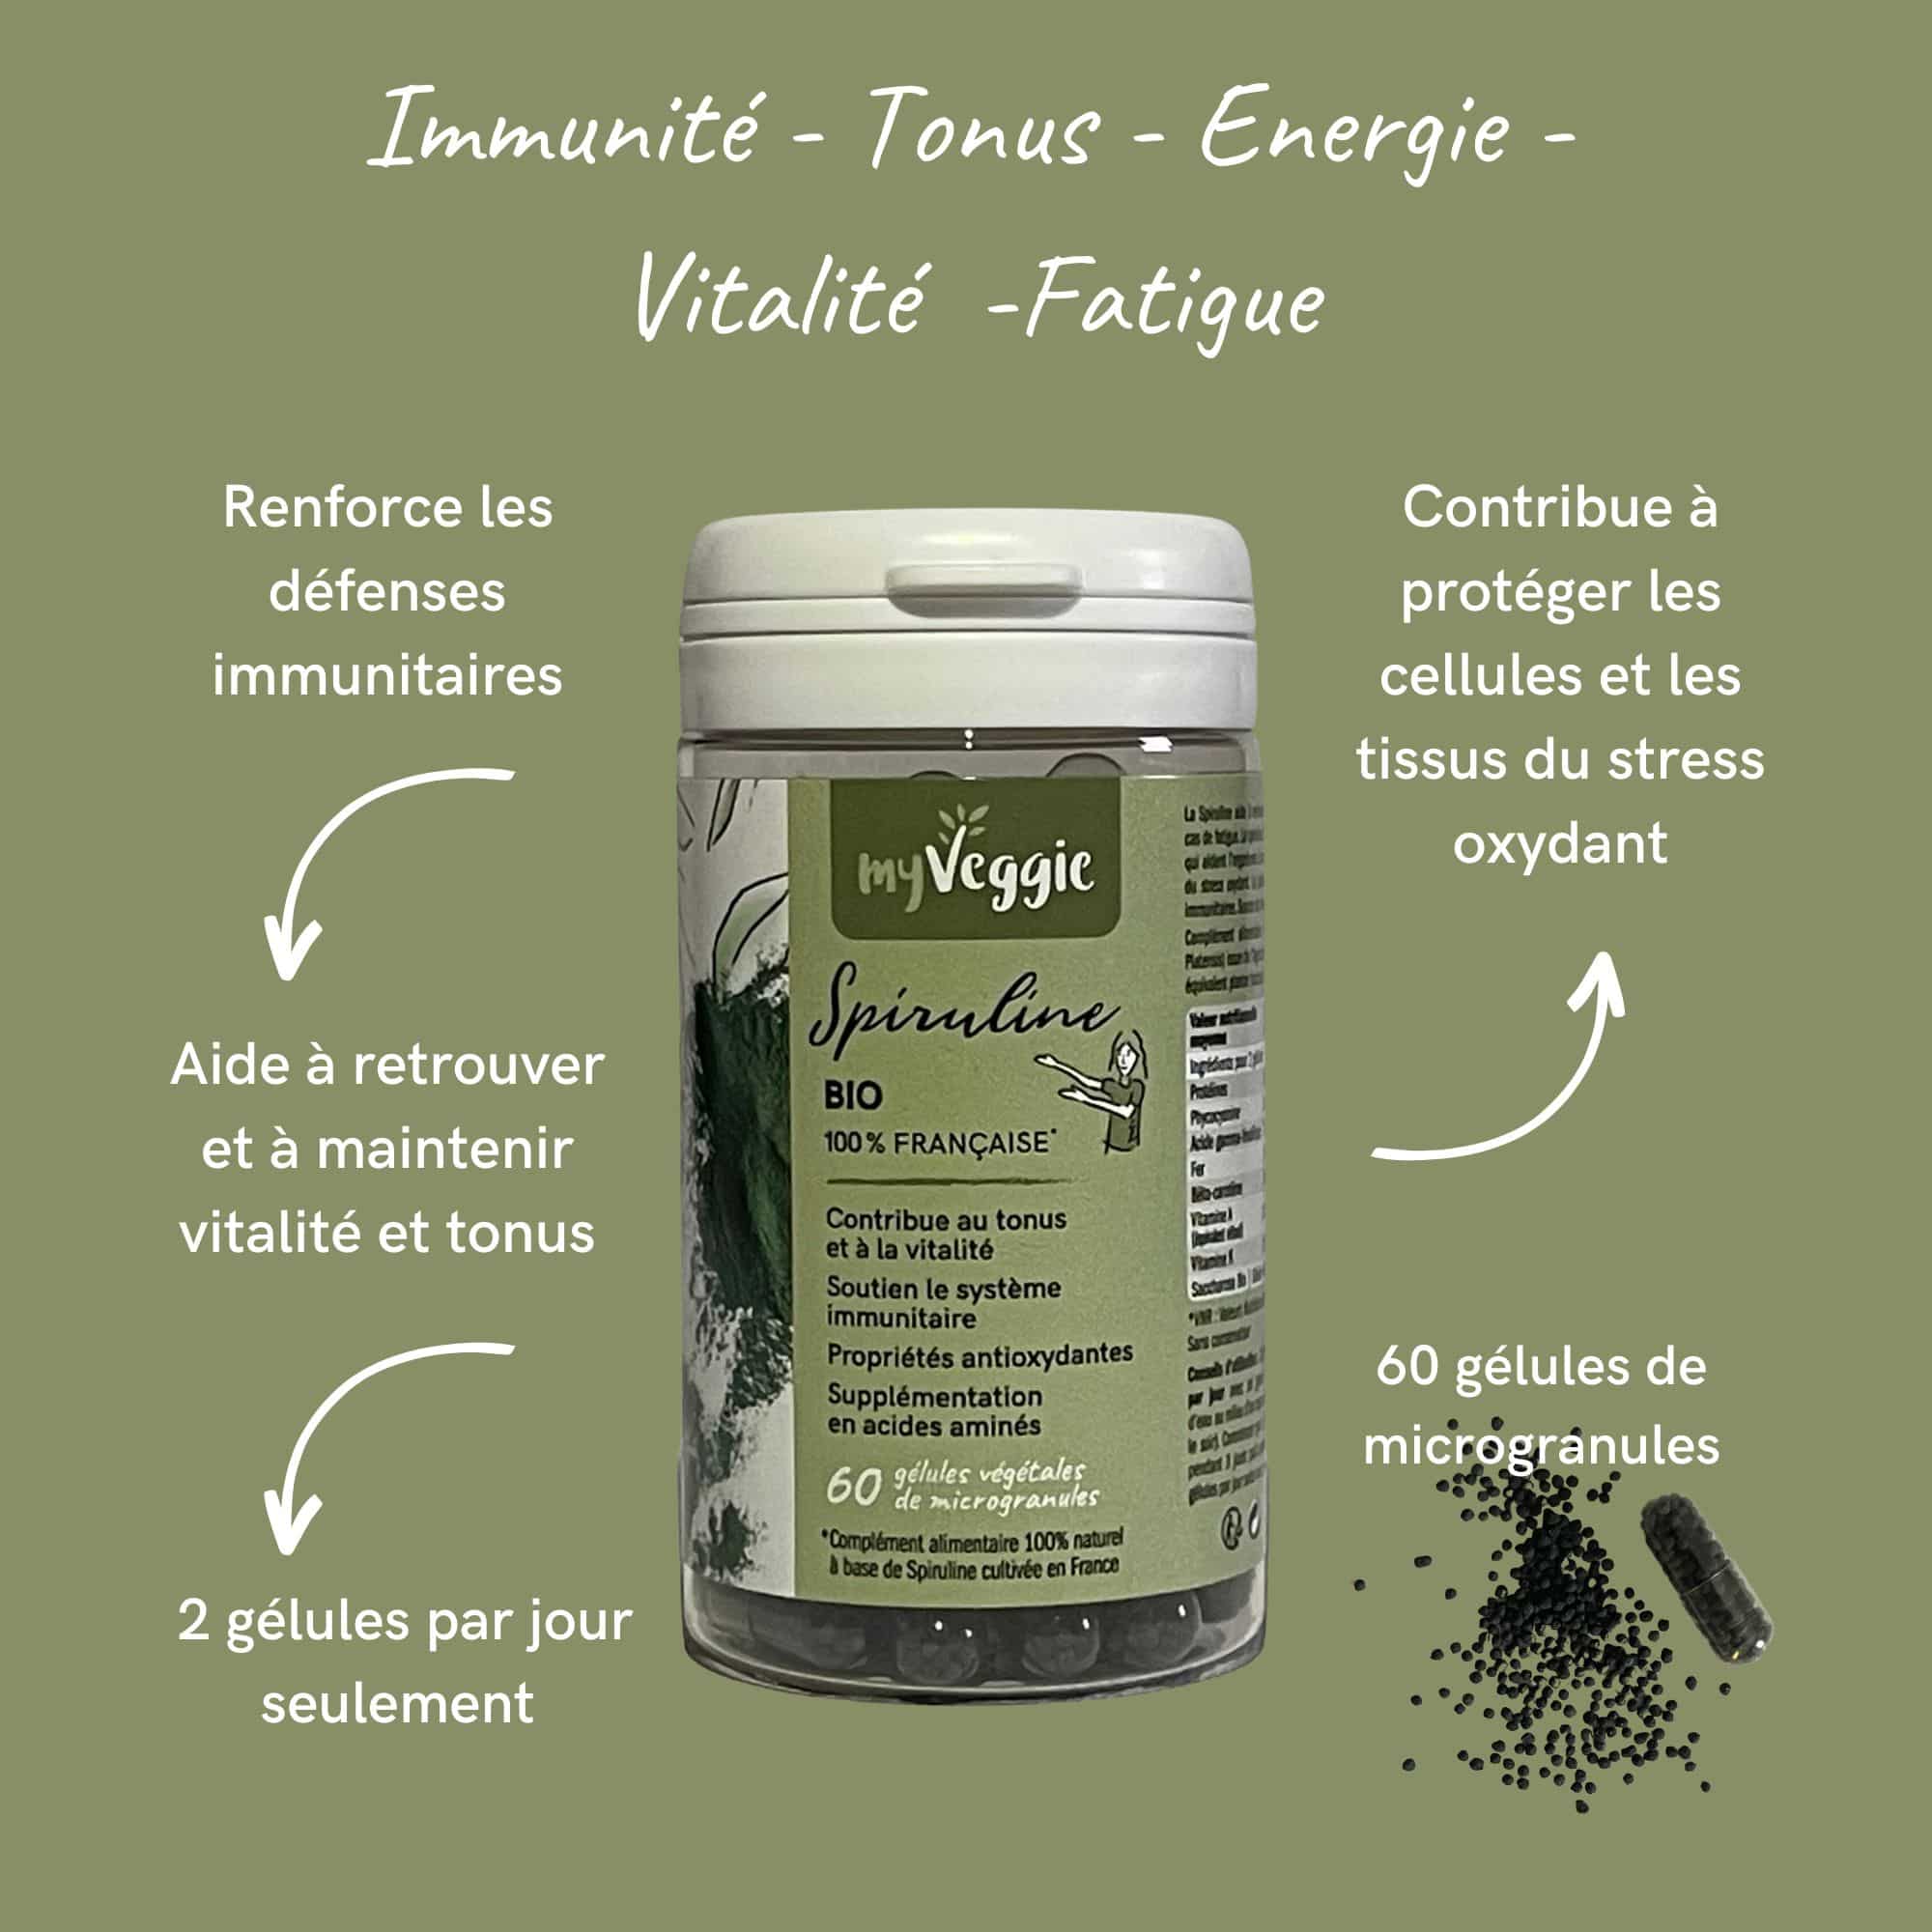 The many health benefits of myVeggie organic Spirulina